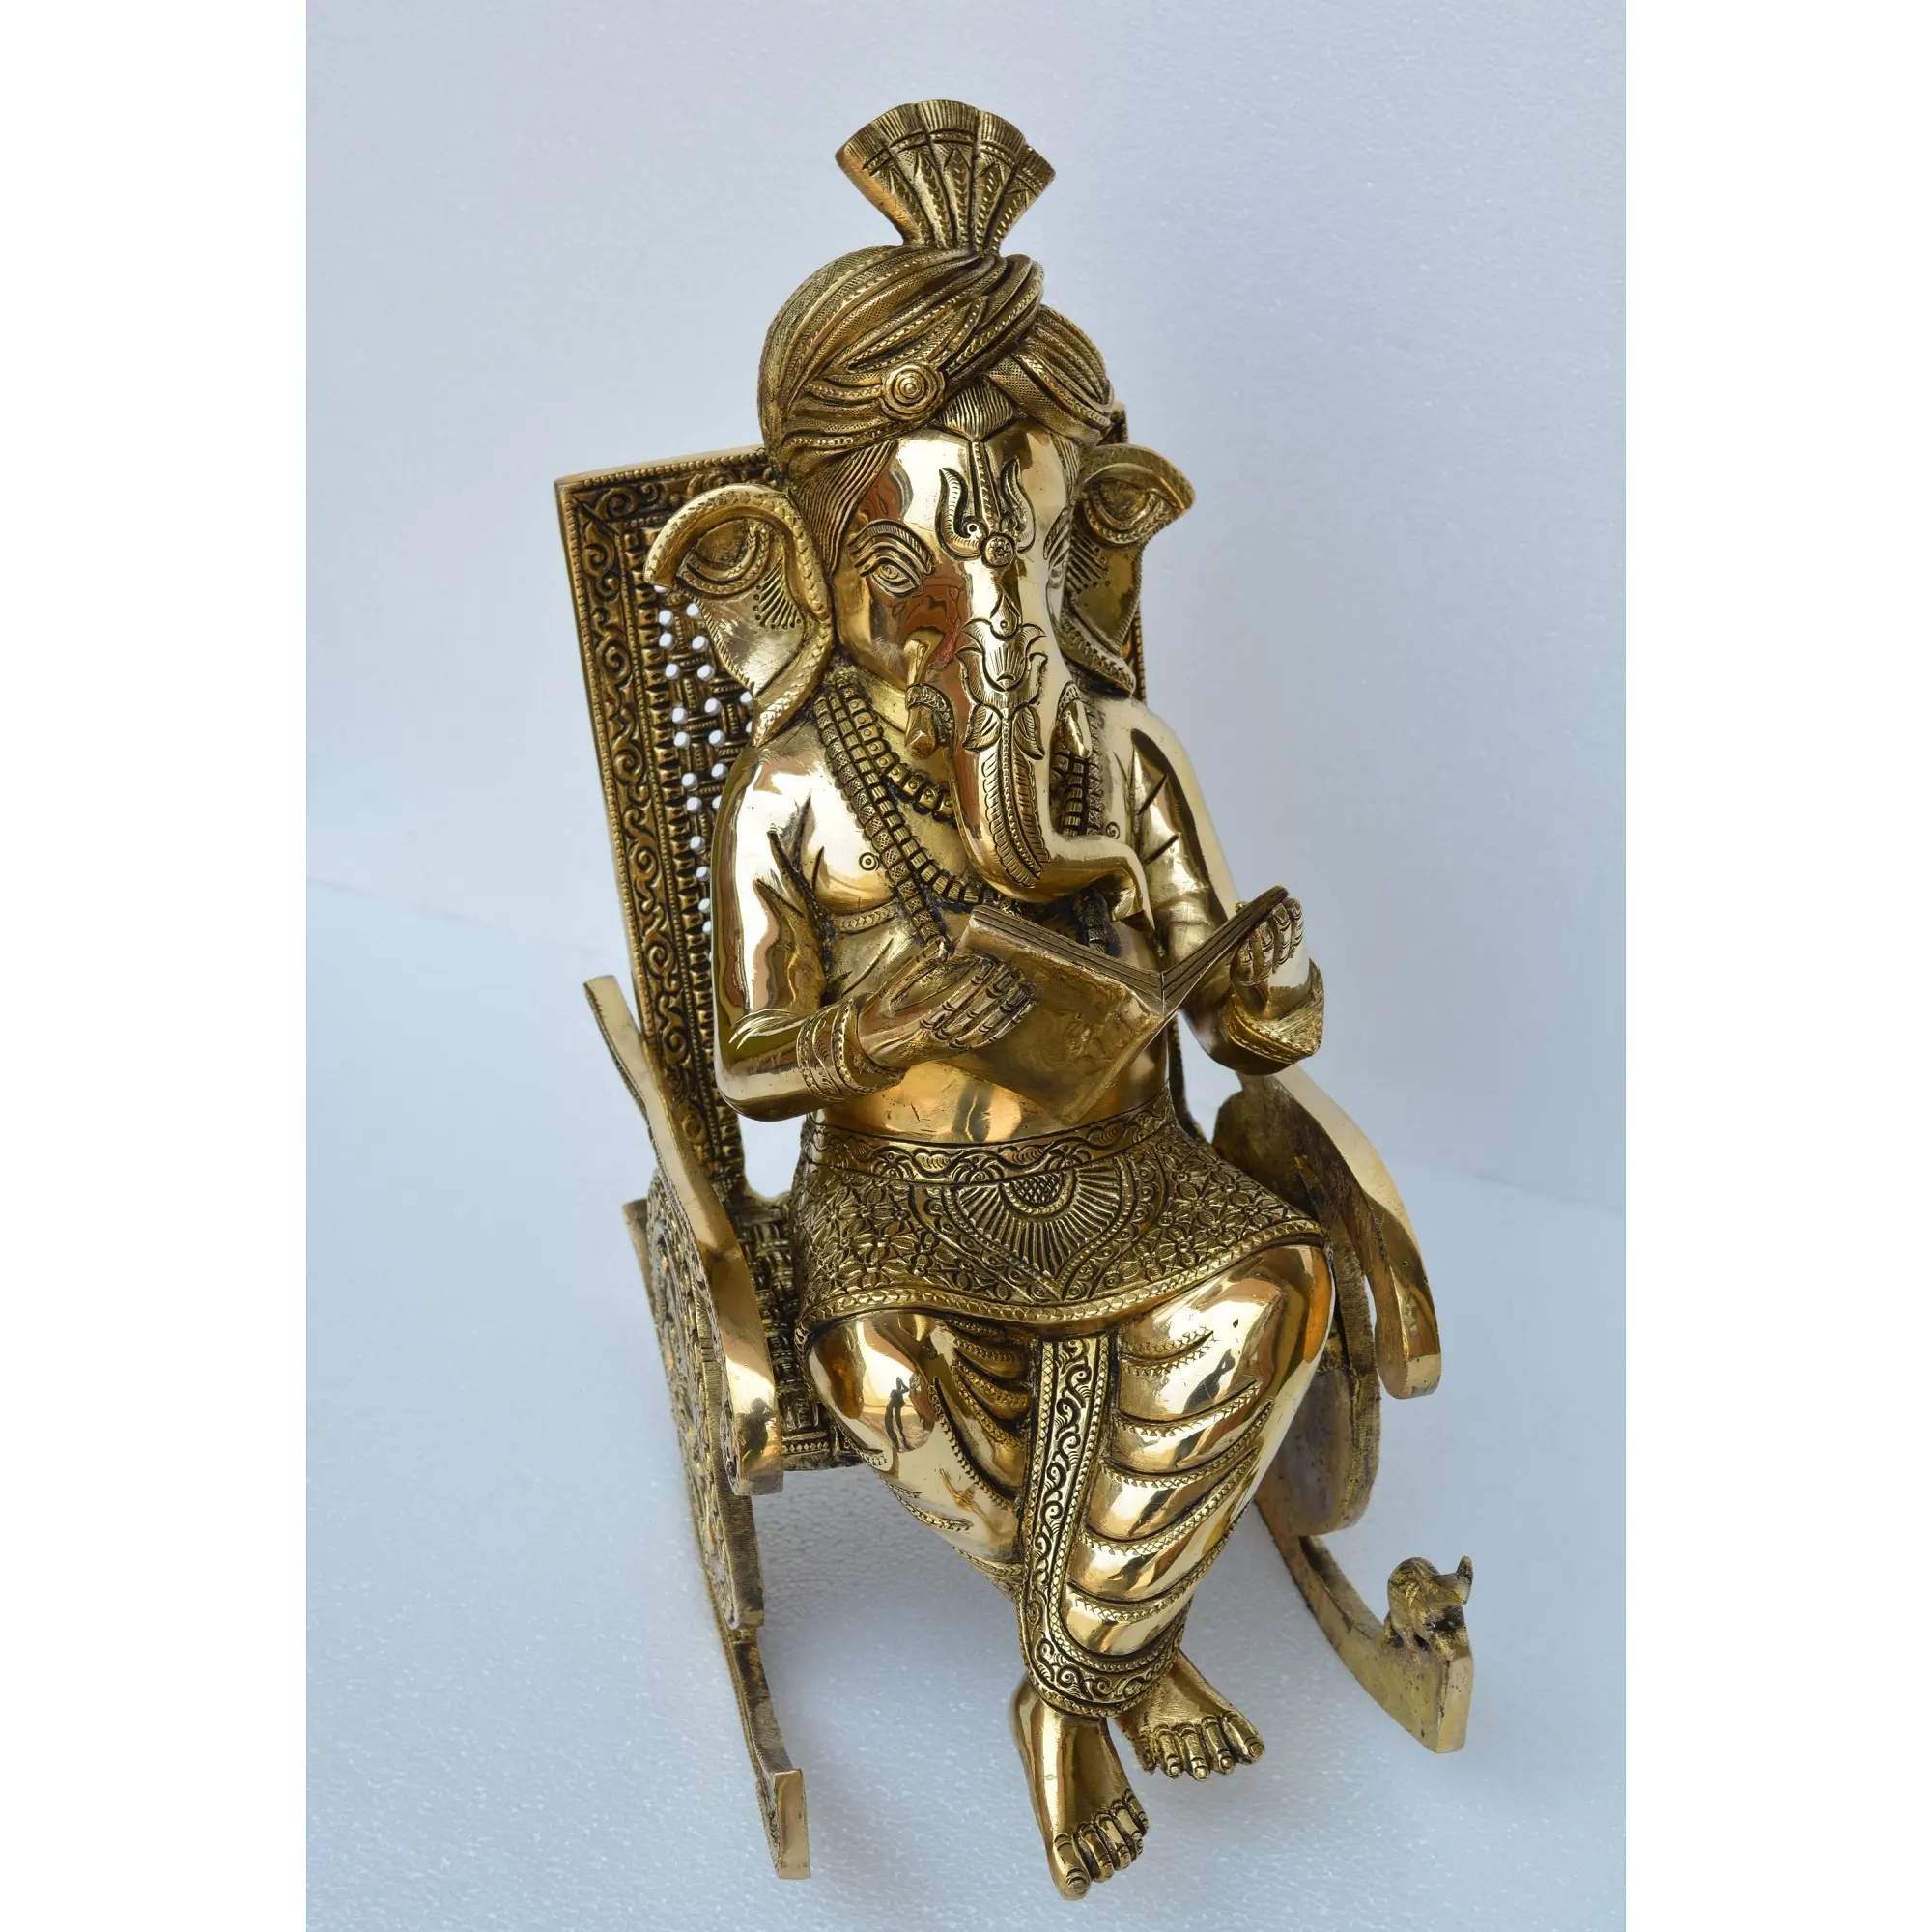 Adorable Gold Polished Sculpture Of Lord Ganesha Sitting On Rest Chair Hot Sale Antique Finished Ganesha Sculpture